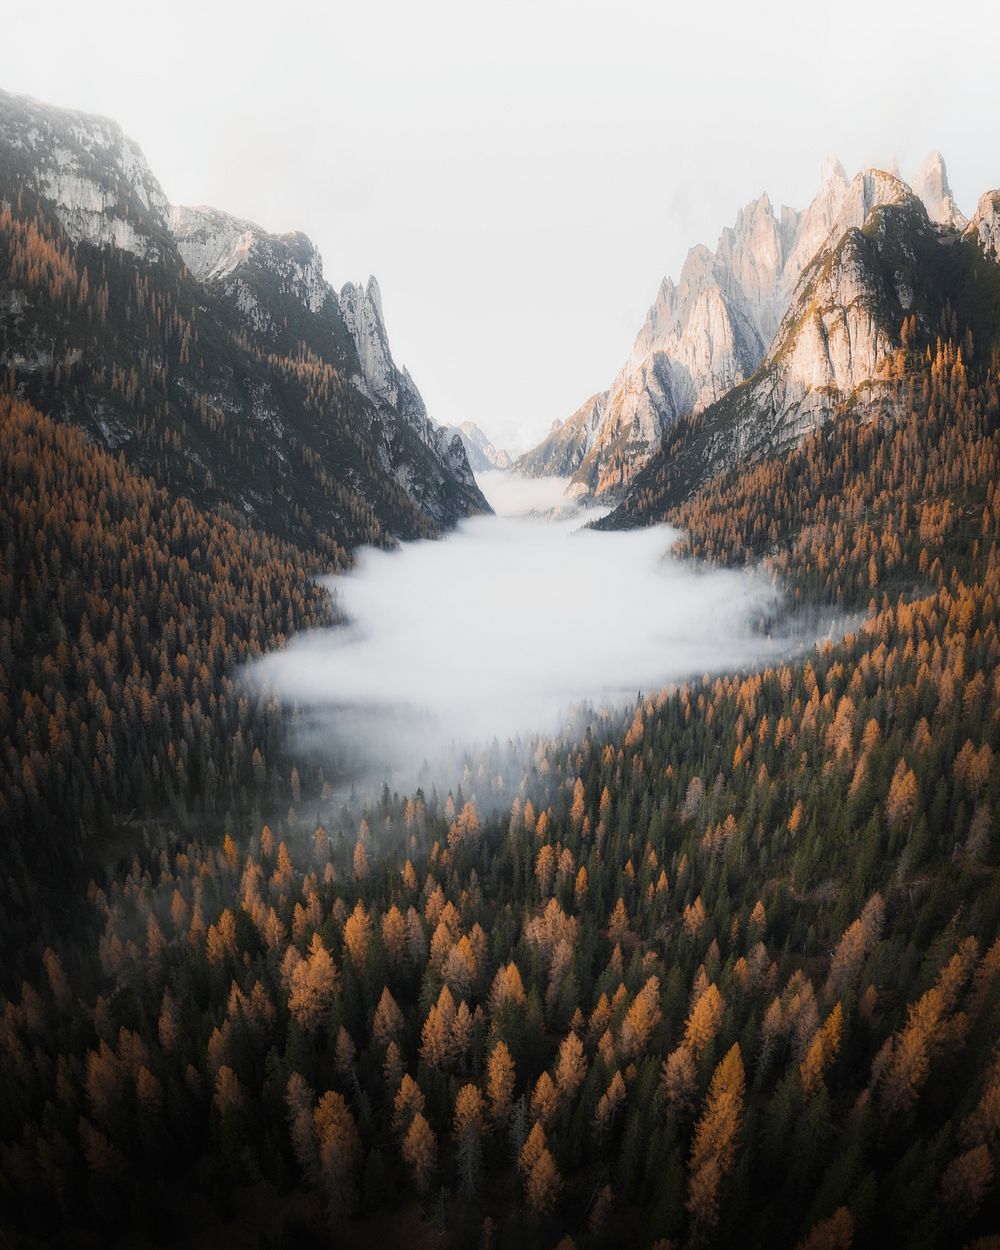 Dolomites mountain range in Italy